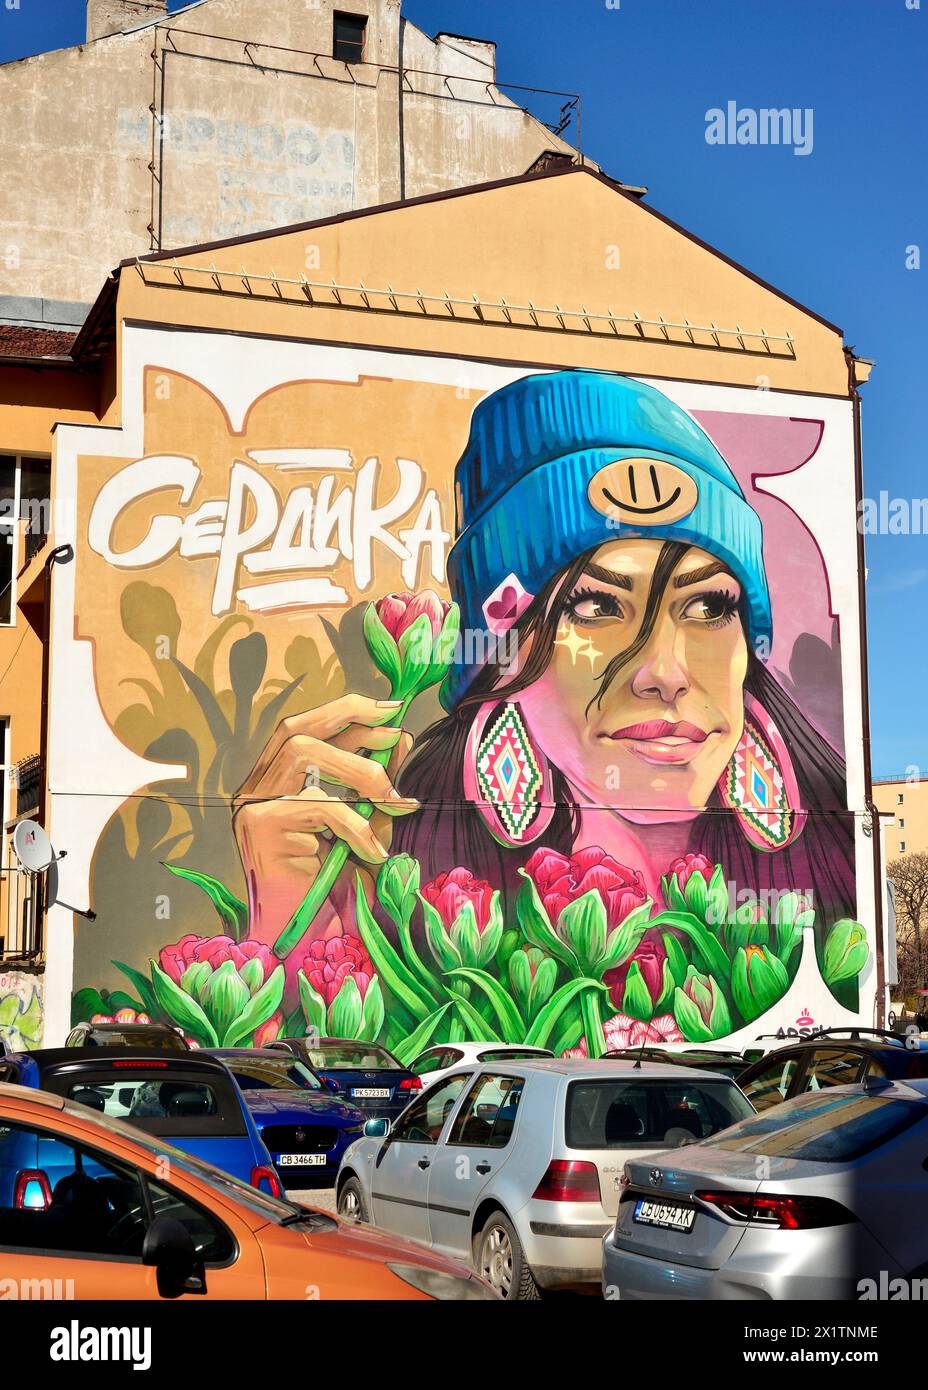 Serdika Tulpe großes Graffiti-Wandbild, das junge Frau mit Tulpenblumen auf einem Parkplatz in Sofia Bulgarien, Osteuropa, Balkan, EU zeigt Stockfoto